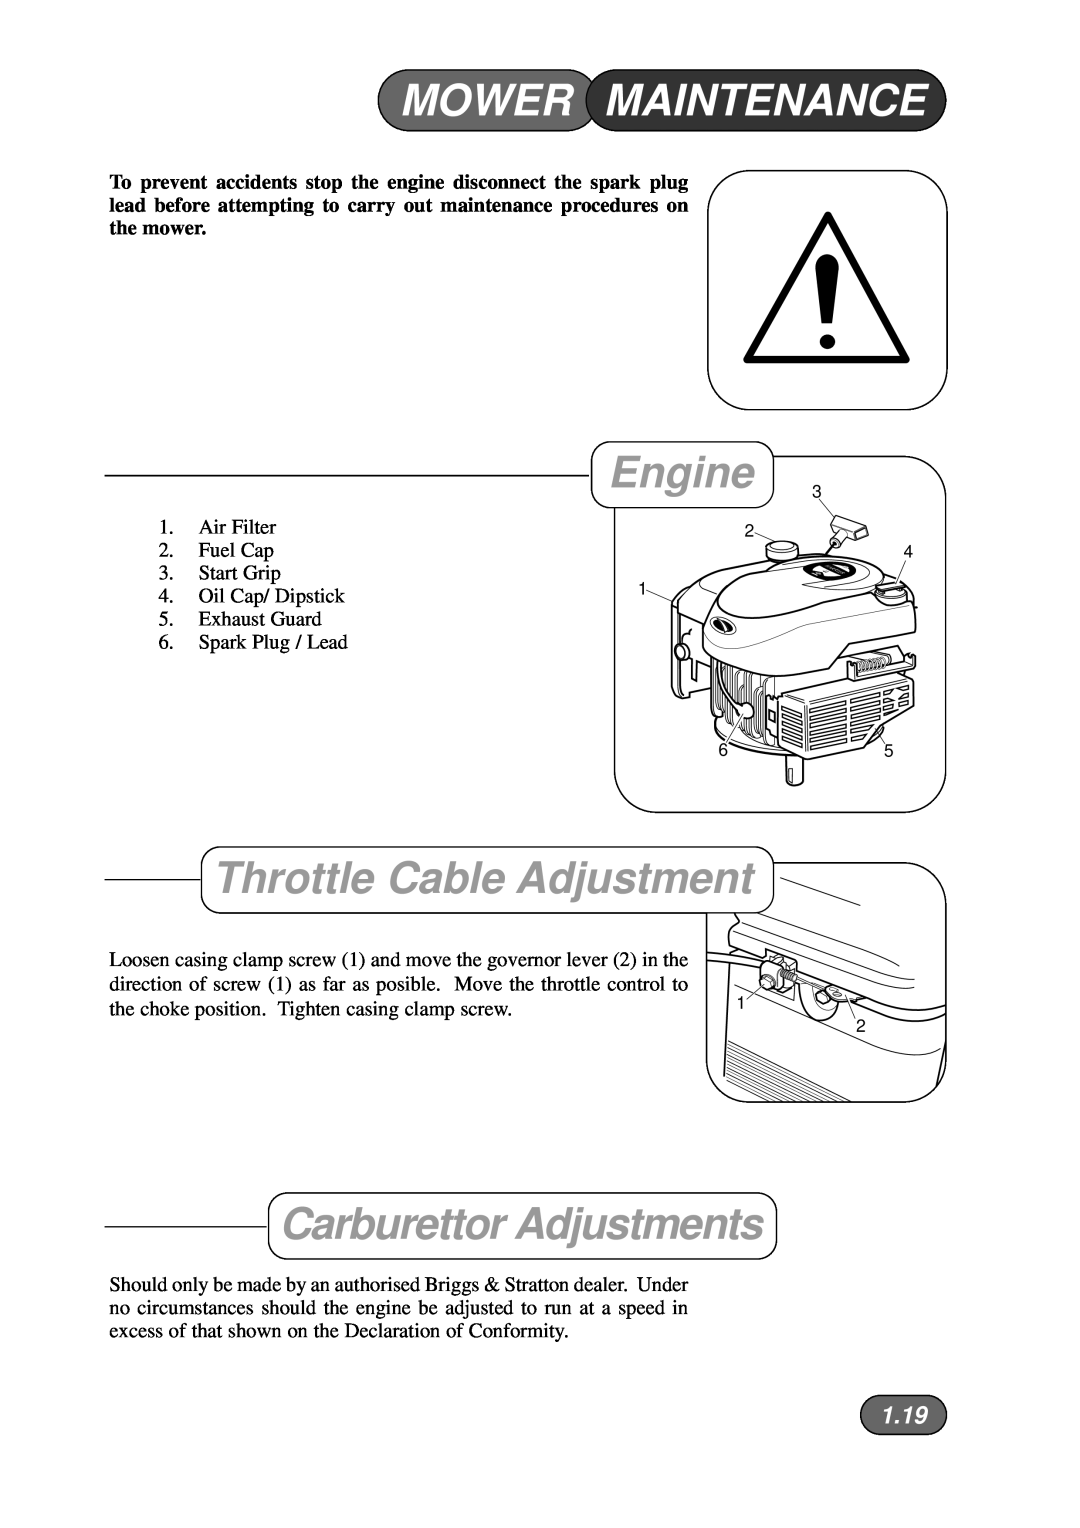 Briggs & Stratton Harrier 41 manual Mower Maintenance, Engine, Throttle Cable Adjustment, Carburettor Adjustments, 1.19 